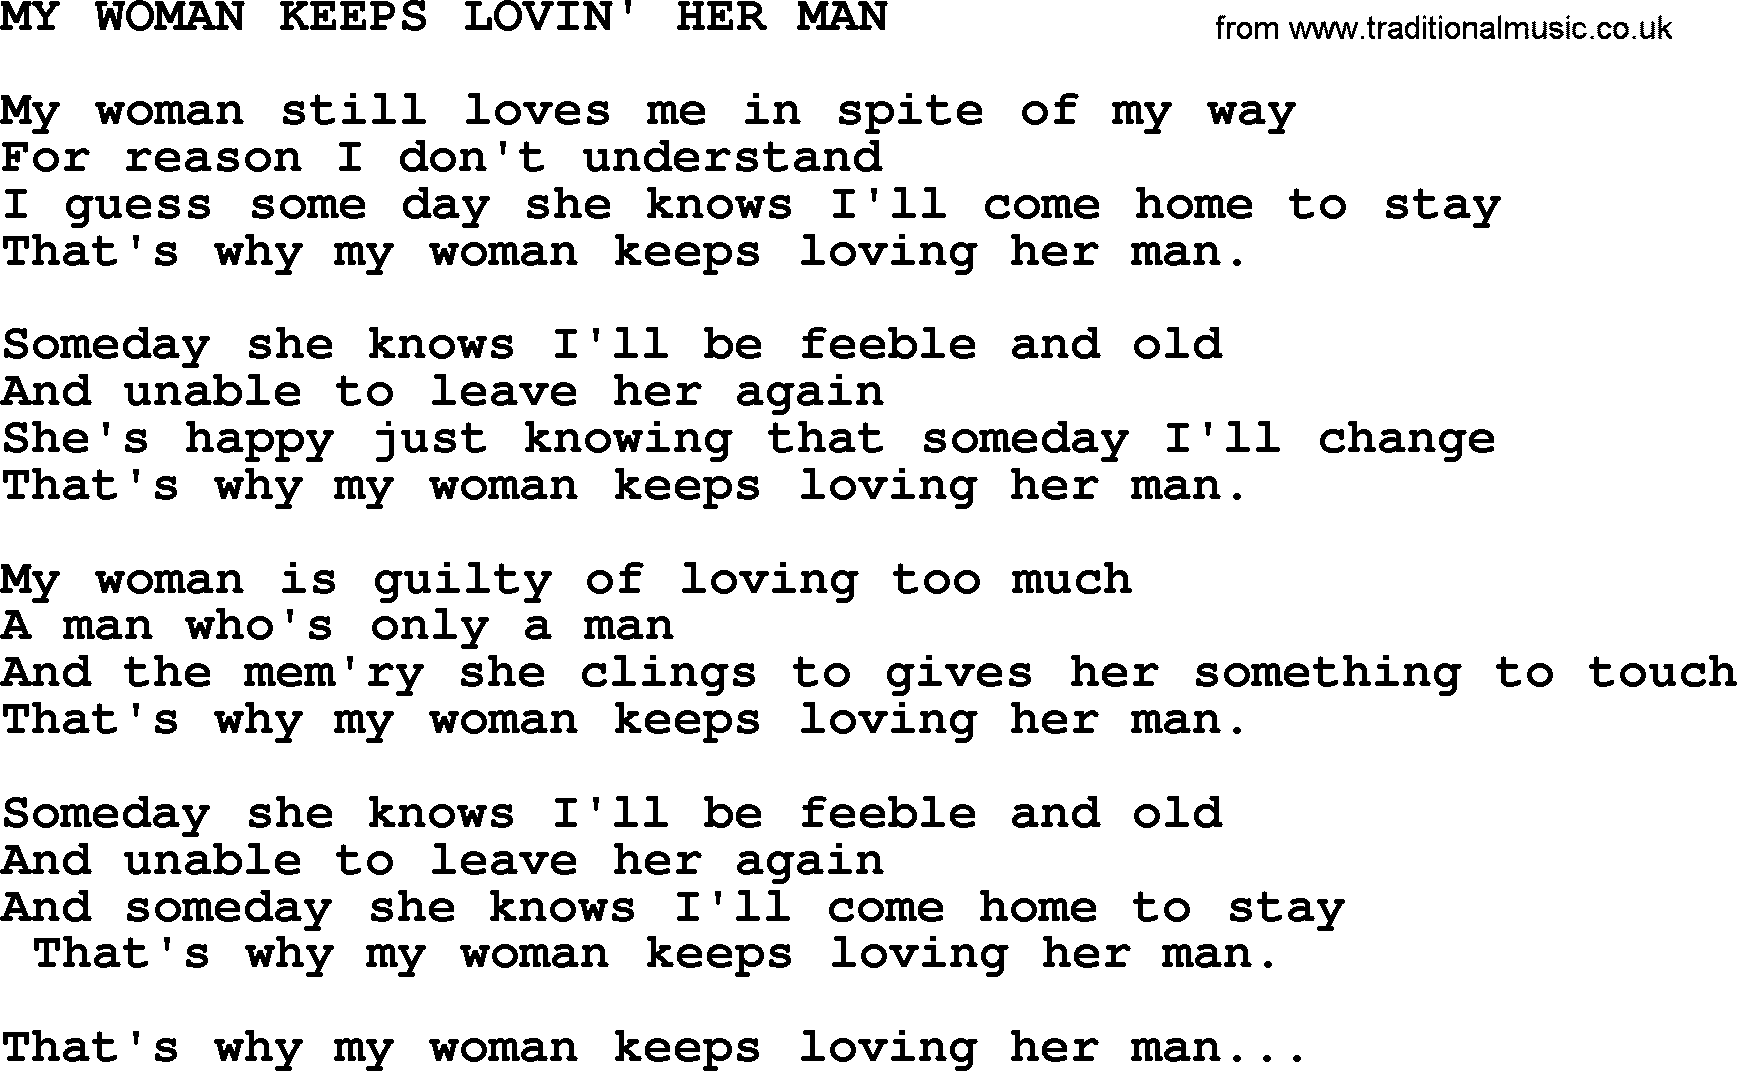 Merle Haggard song: My Woman Keeps Lovin' Her Man, lyrics.